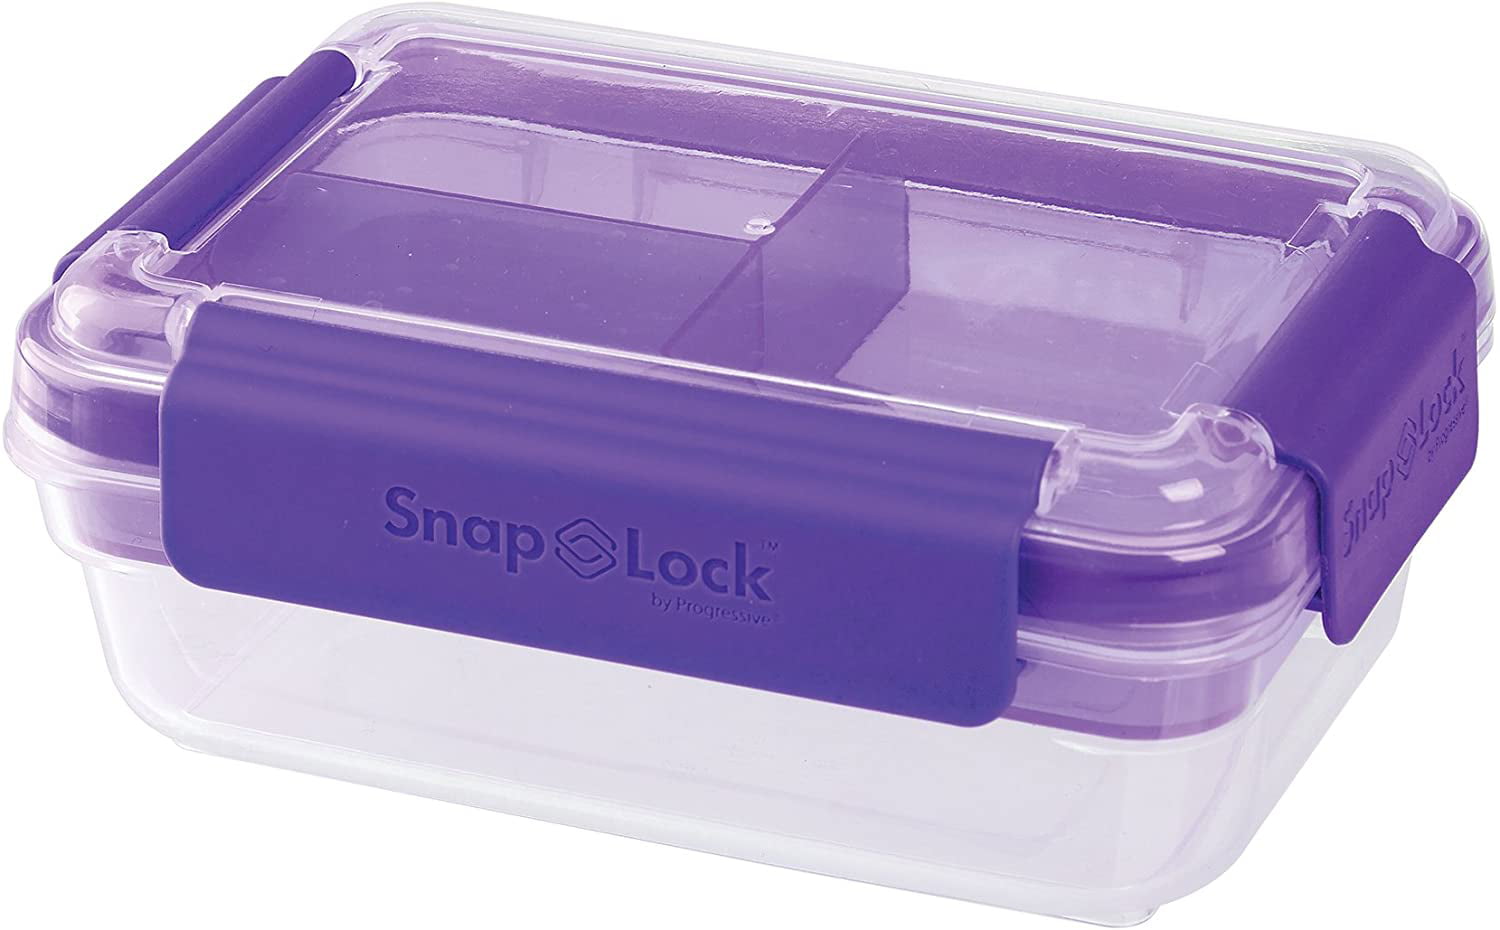 Progressive International Snaplock 3 Piece Set, On-The-Go, Leak-Resistant 5  Ounce Snack Container Set